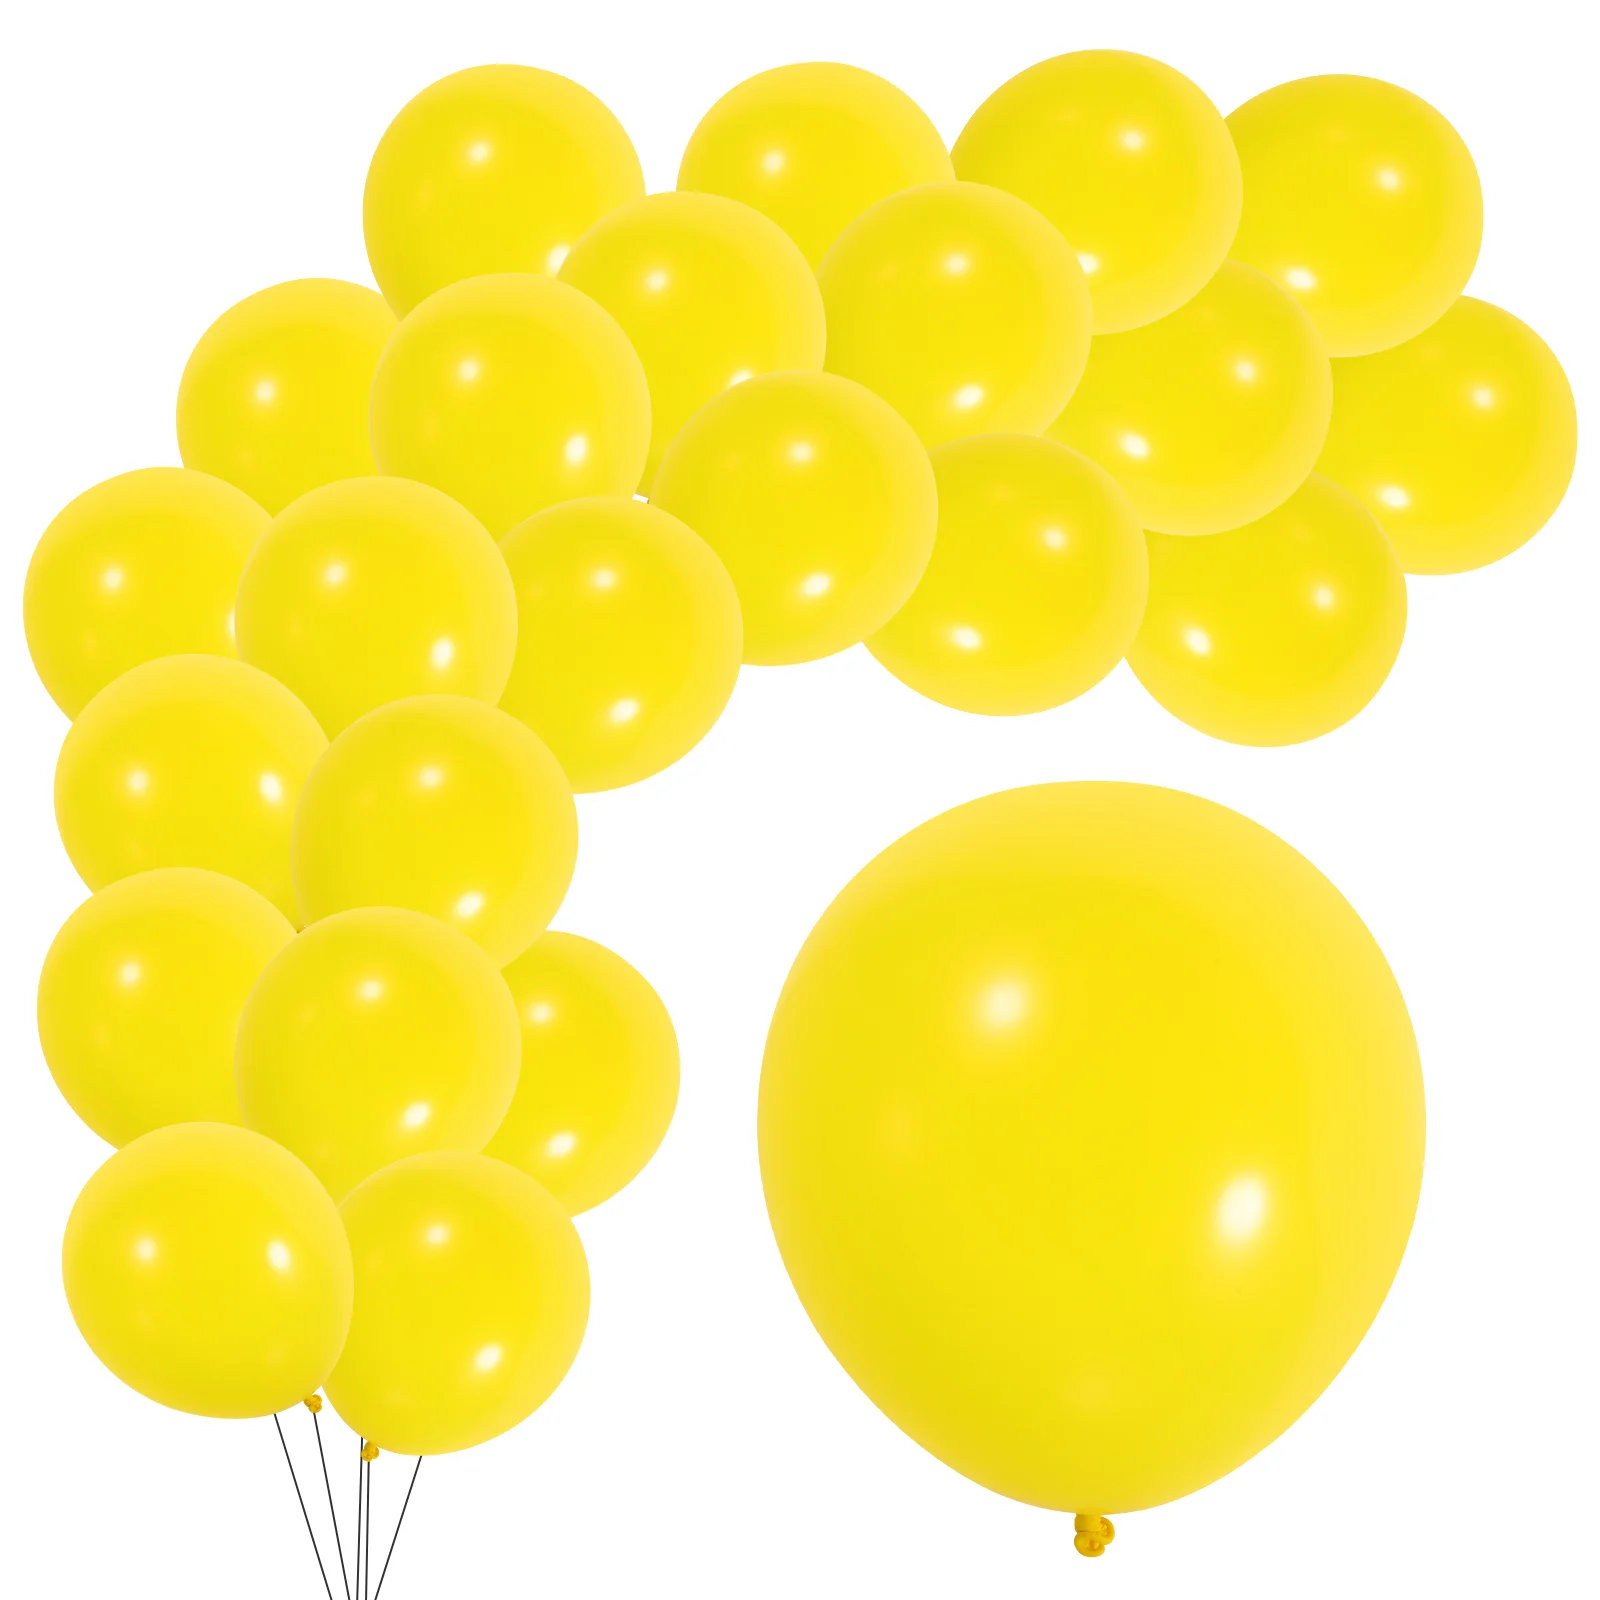 

100 Pcs Balloon Kids Suit Decor Wedding Balloons Arch Party Supplies Decorations Birthday Emulsion Kit Child Decorative